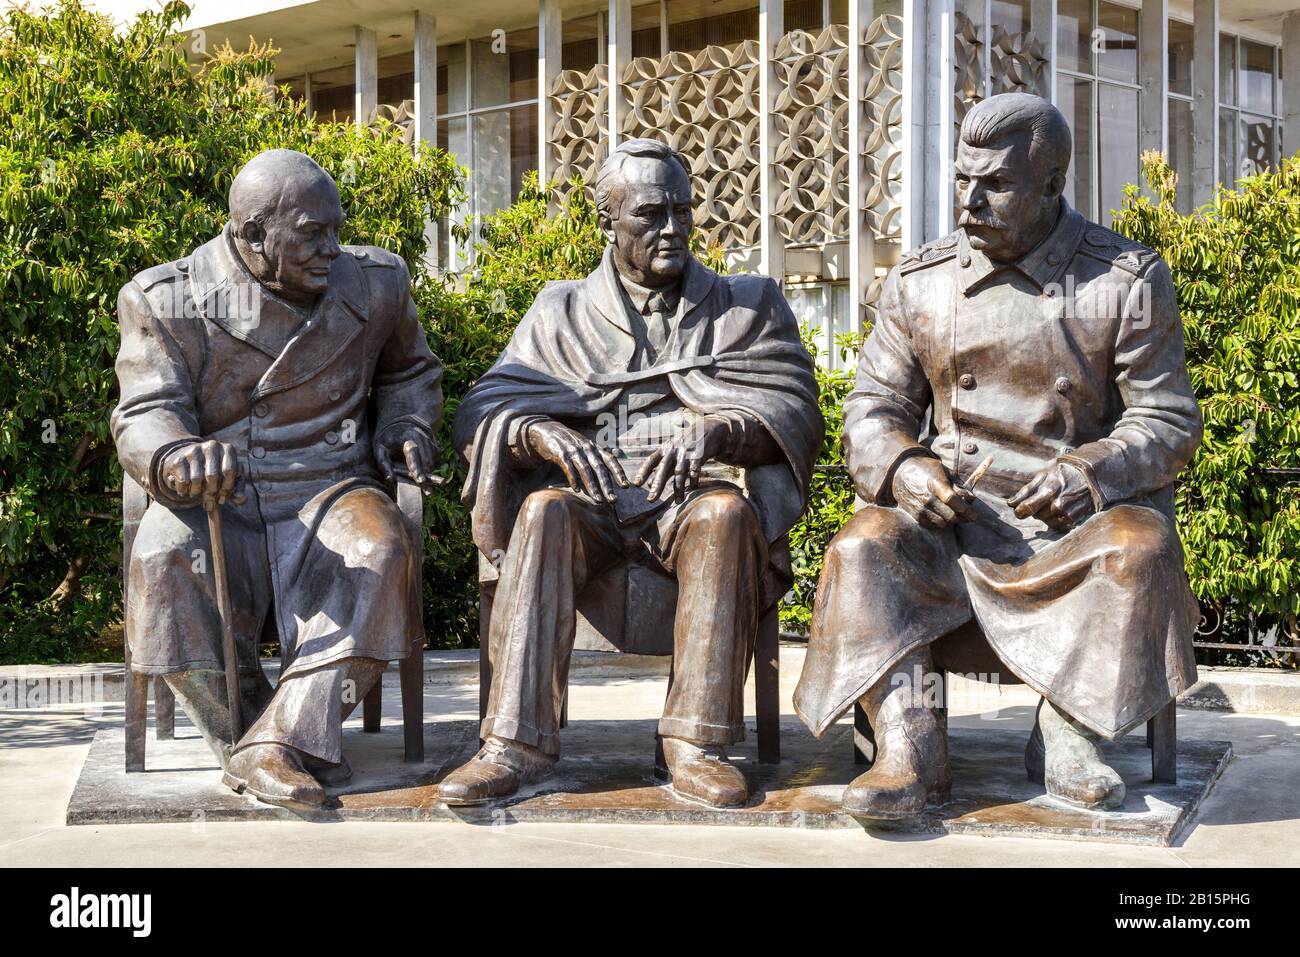 Yalta, Crimea - May 17, 2016: Sculpture of Churchill, Roosevelt and Stalin in Livadia Palace, Crimea, Russia. Statues by Zurab Tsereteli in summer. Th Stock Photo